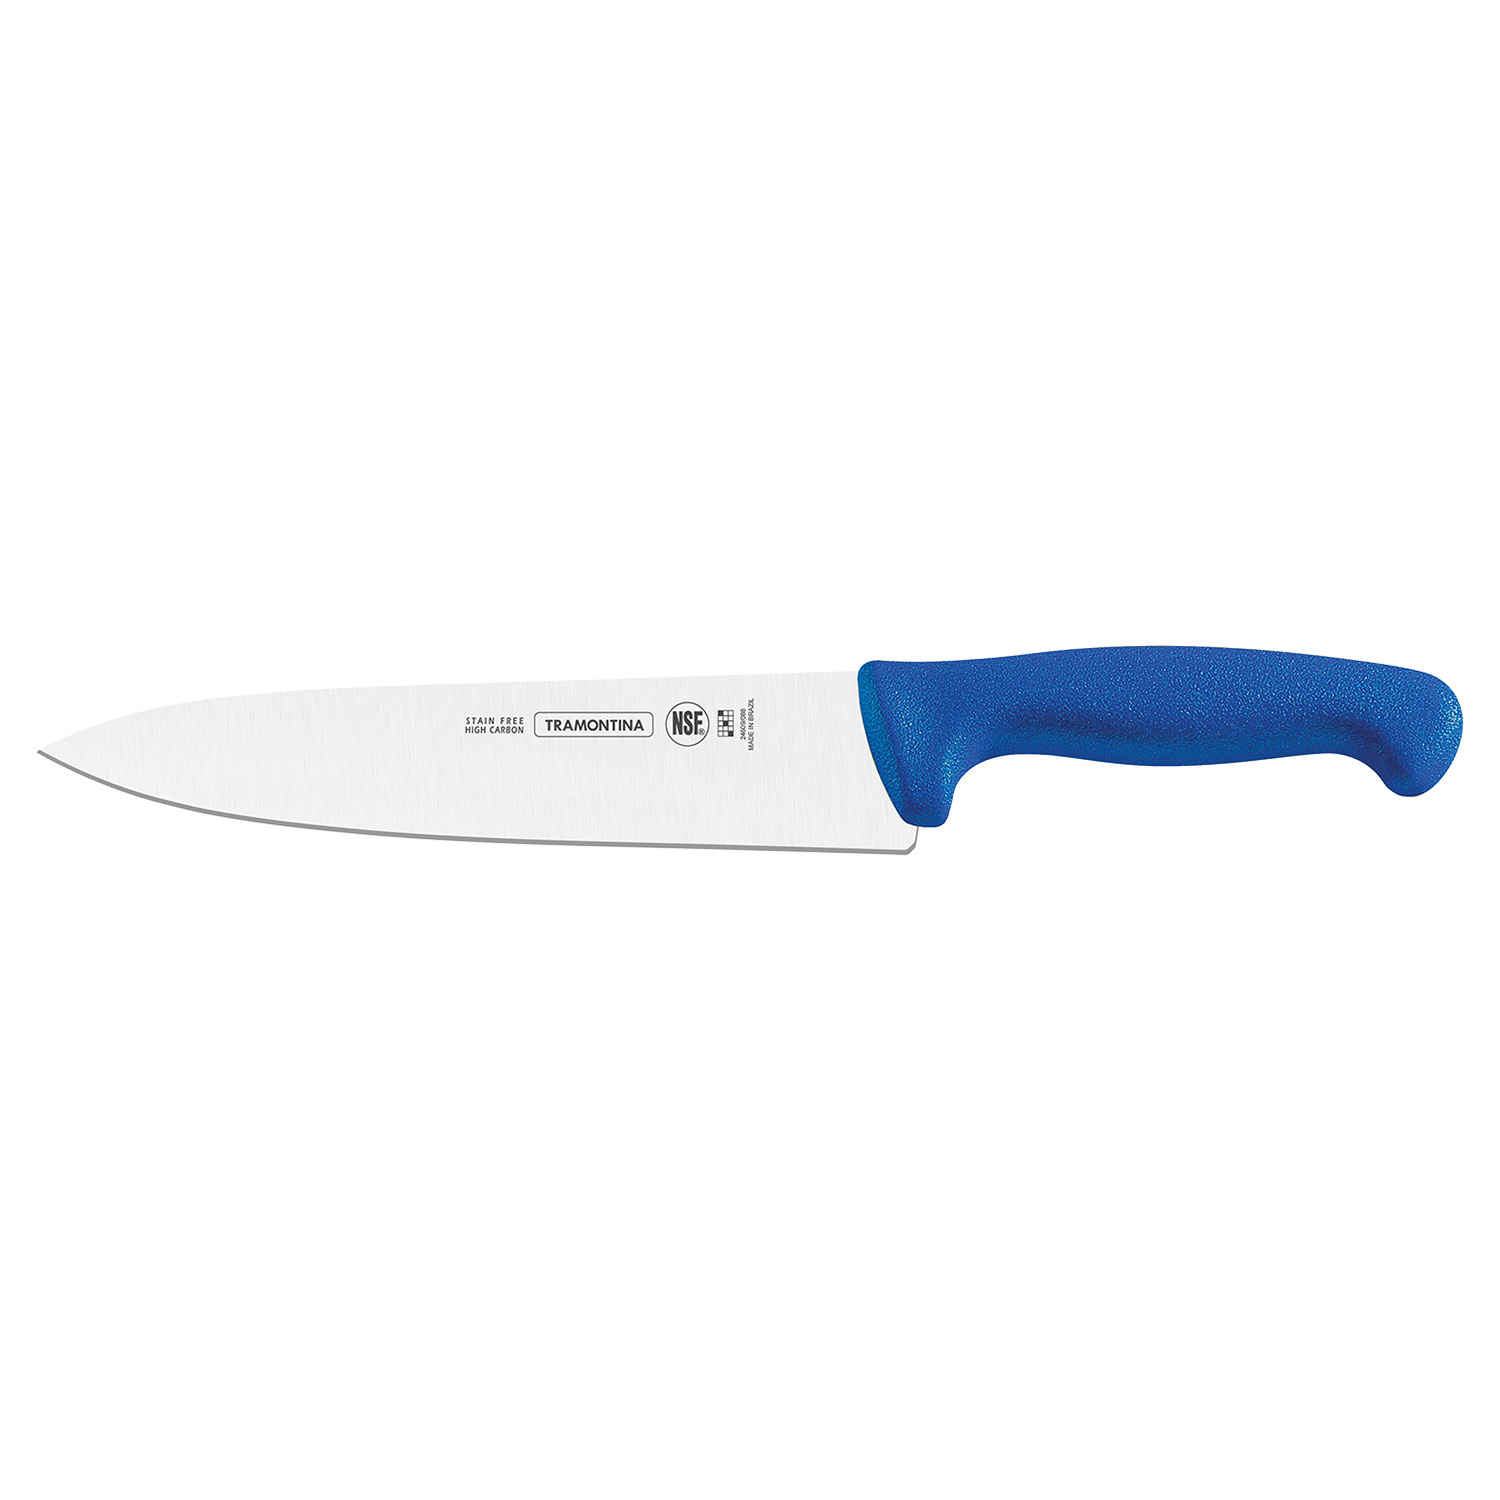 Нож Professional Master 153мм/295мм синий